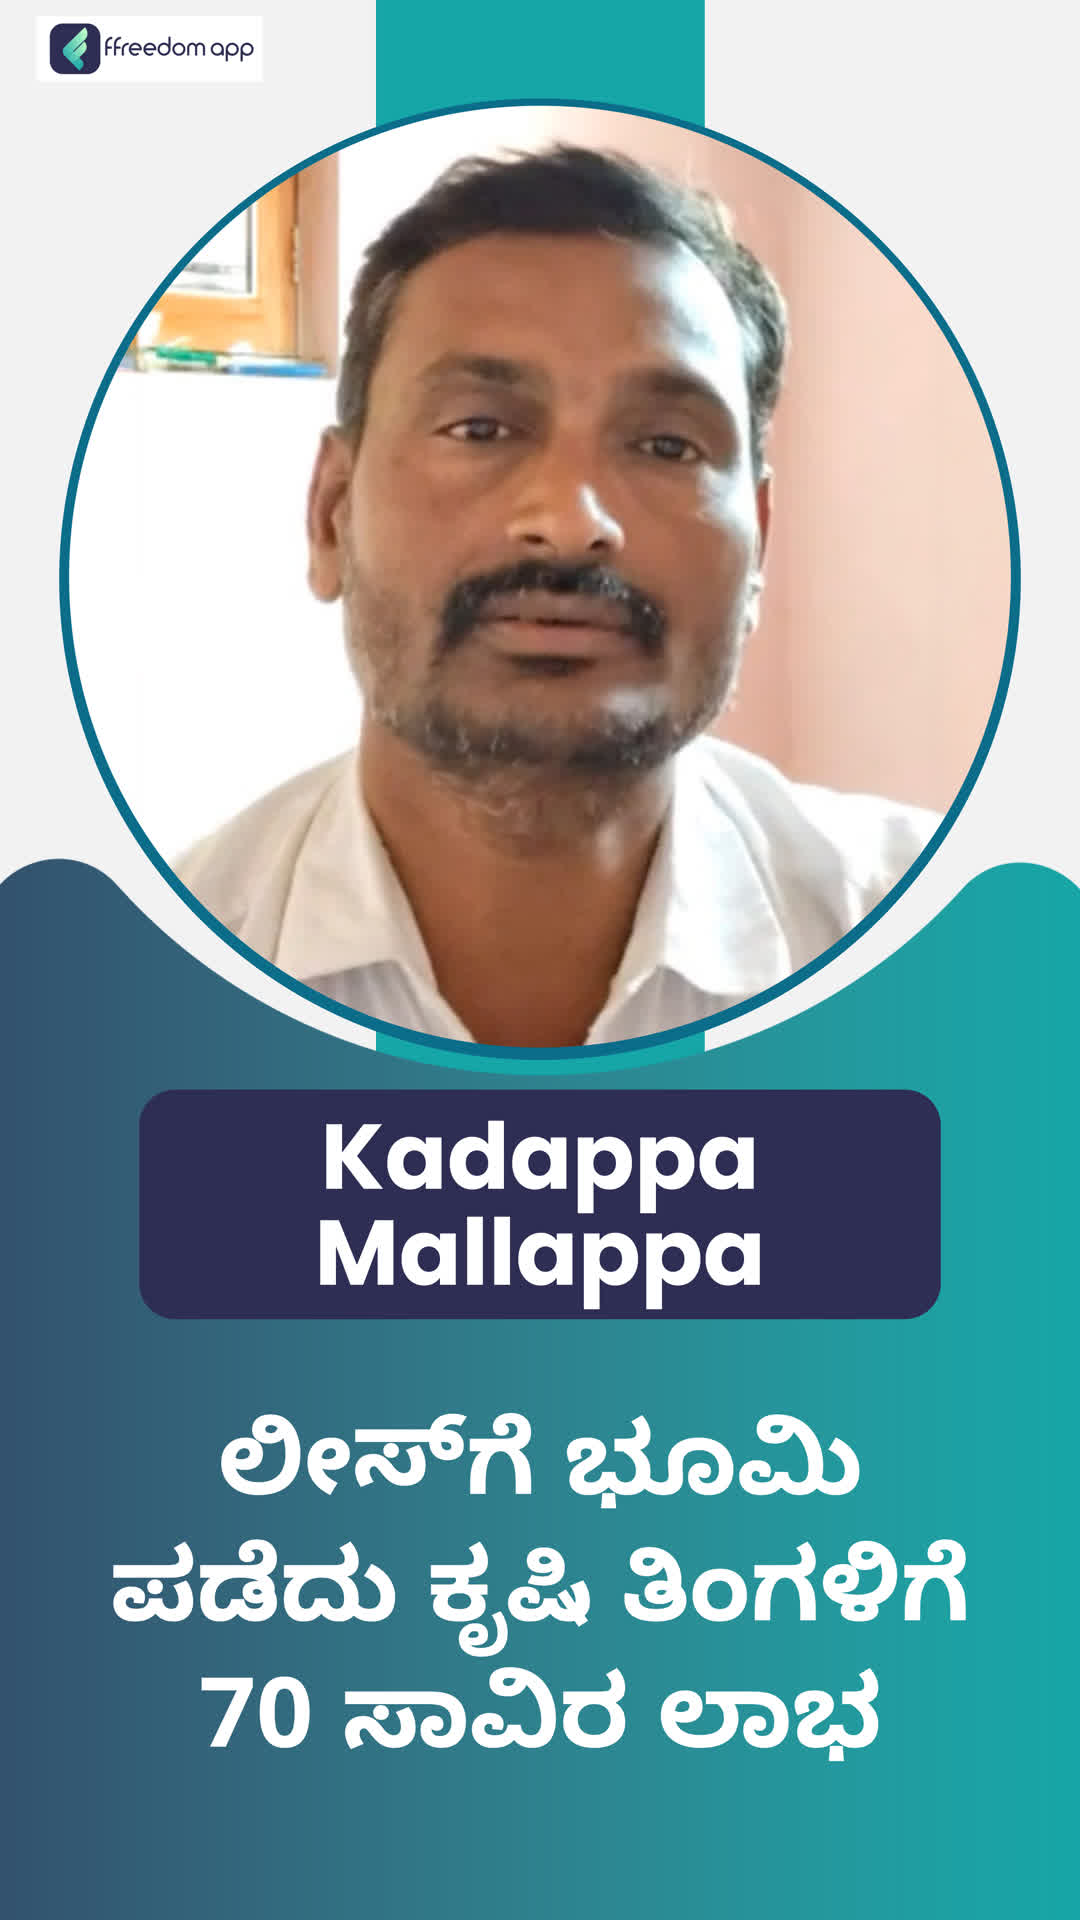 Kadappa Mallappa Bal's Honest Review of ffreedom app - Belagavi ,Karnataka